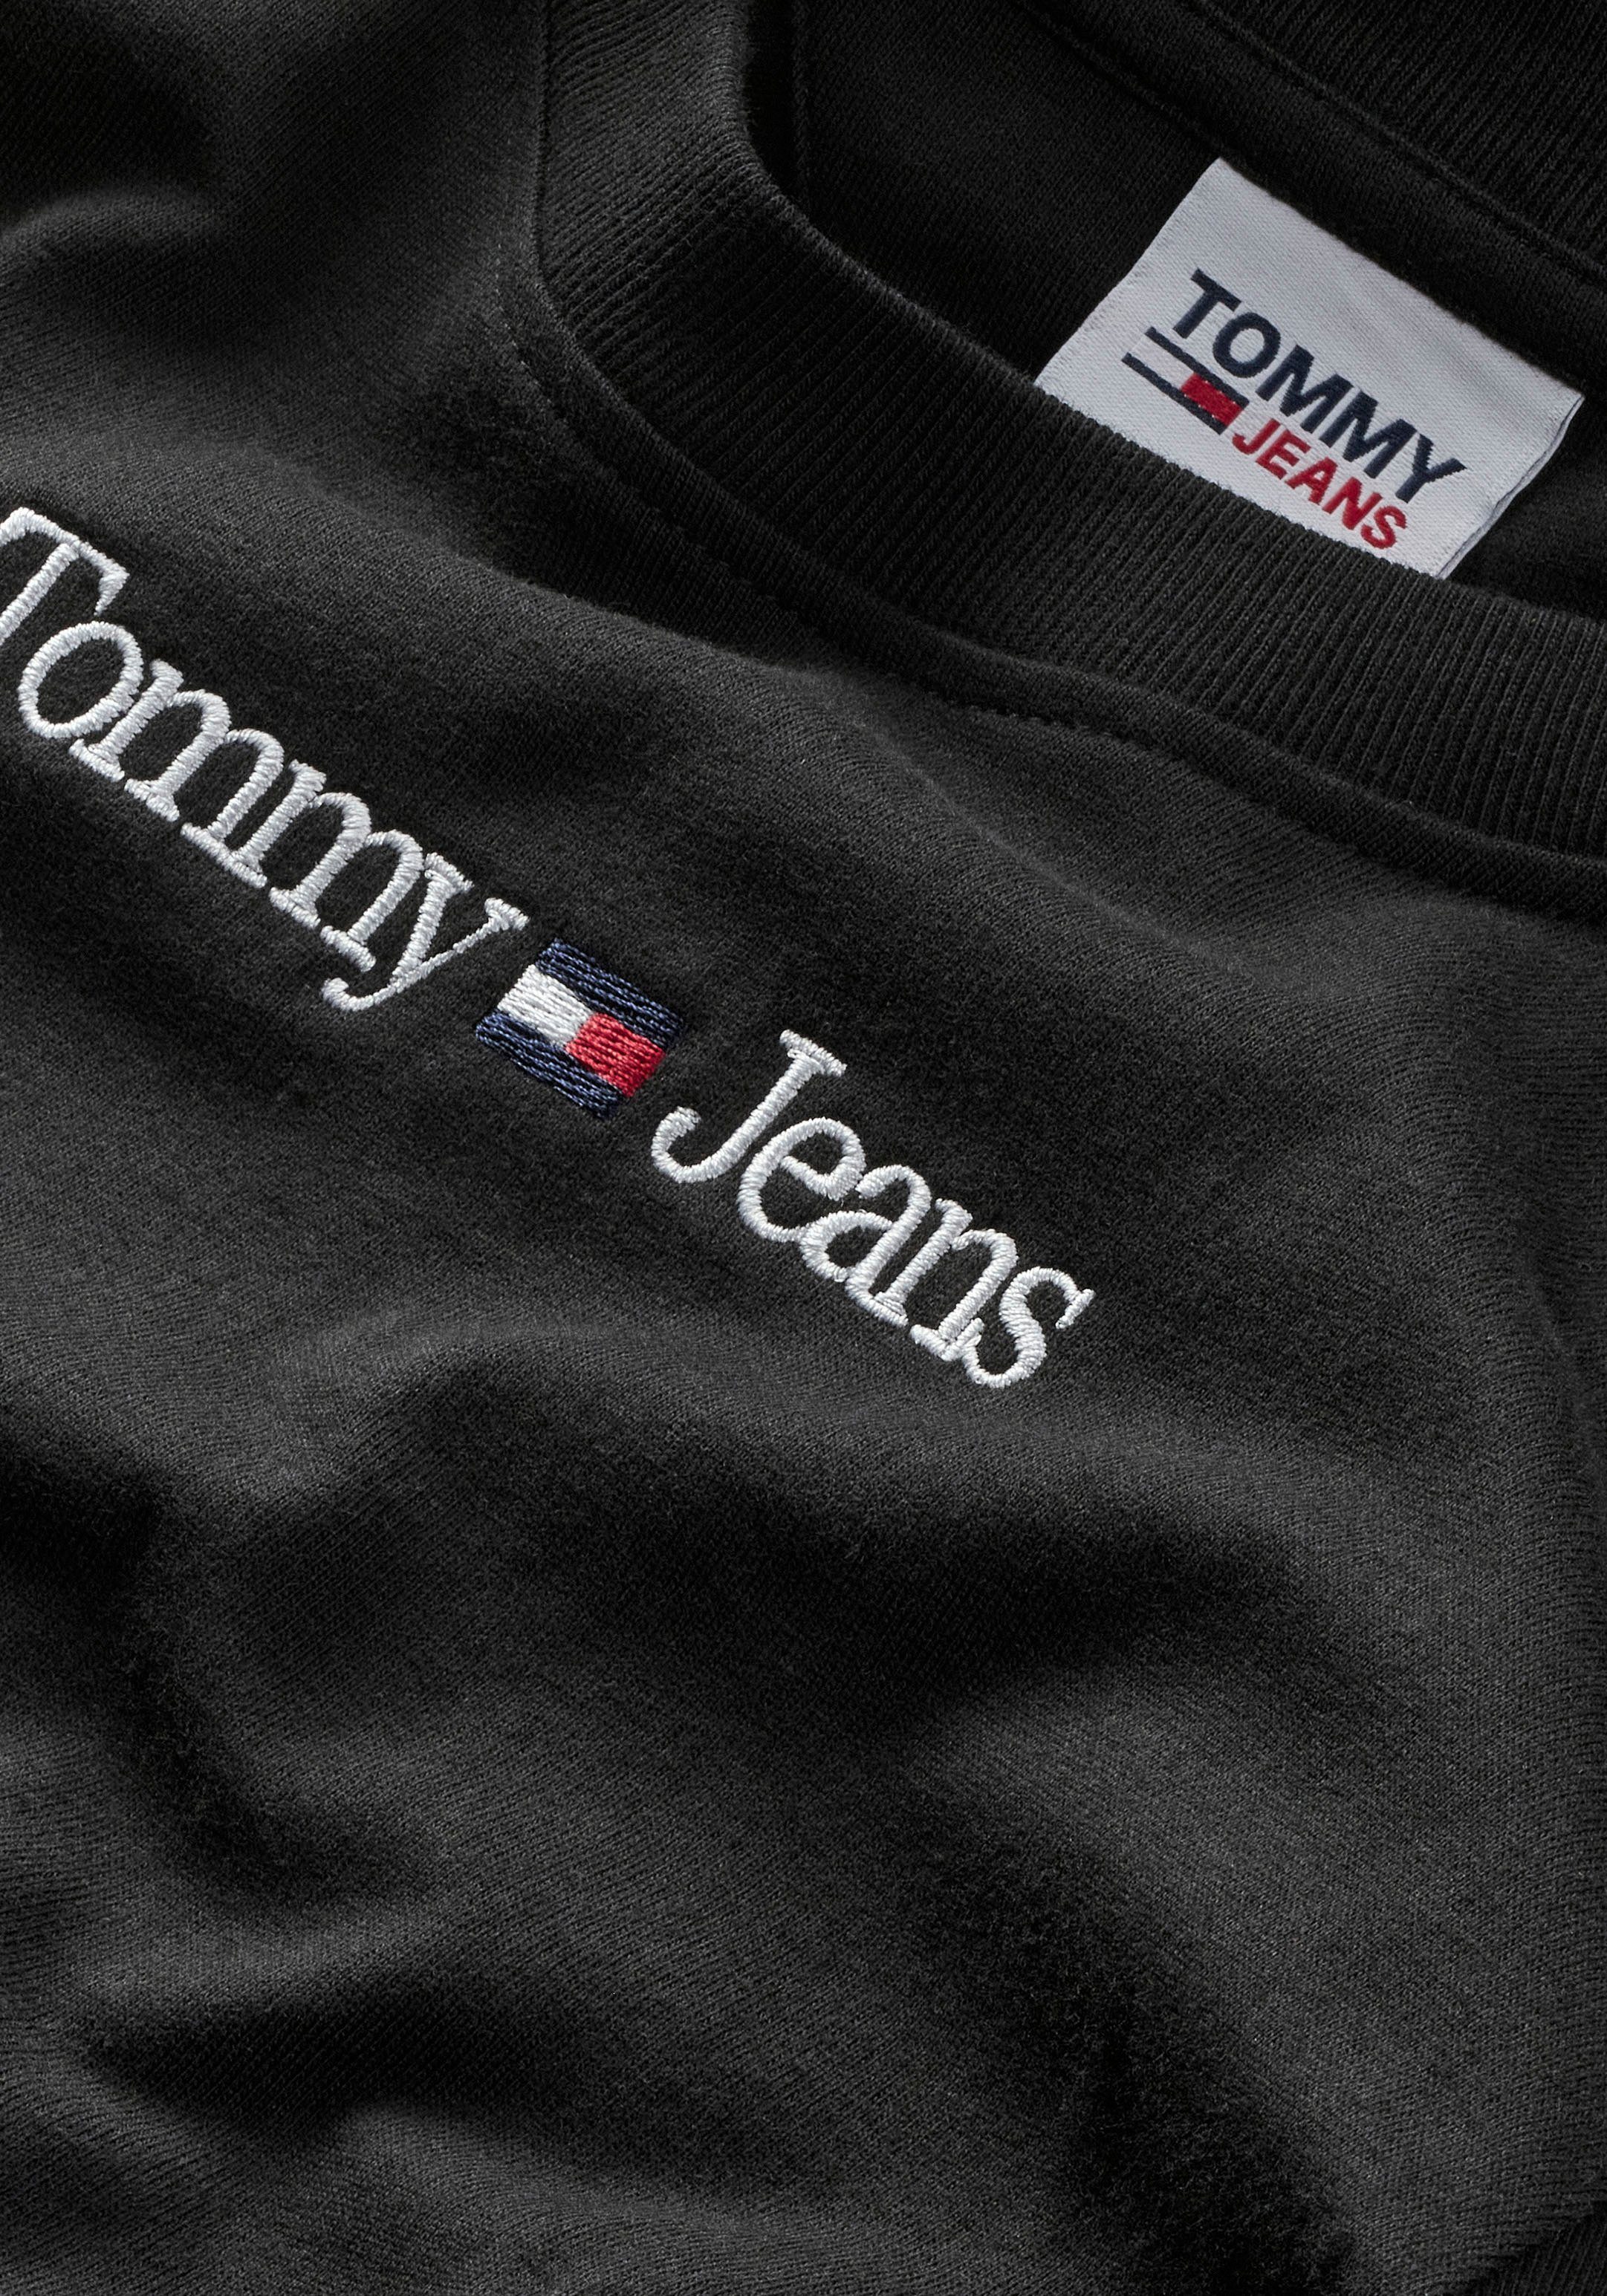 Tommy schwarz BABY Jeans gesticktem Logo-Schriftzug mit LINEAR Langarmshirt Tommy SERIF TJW Jeans LS